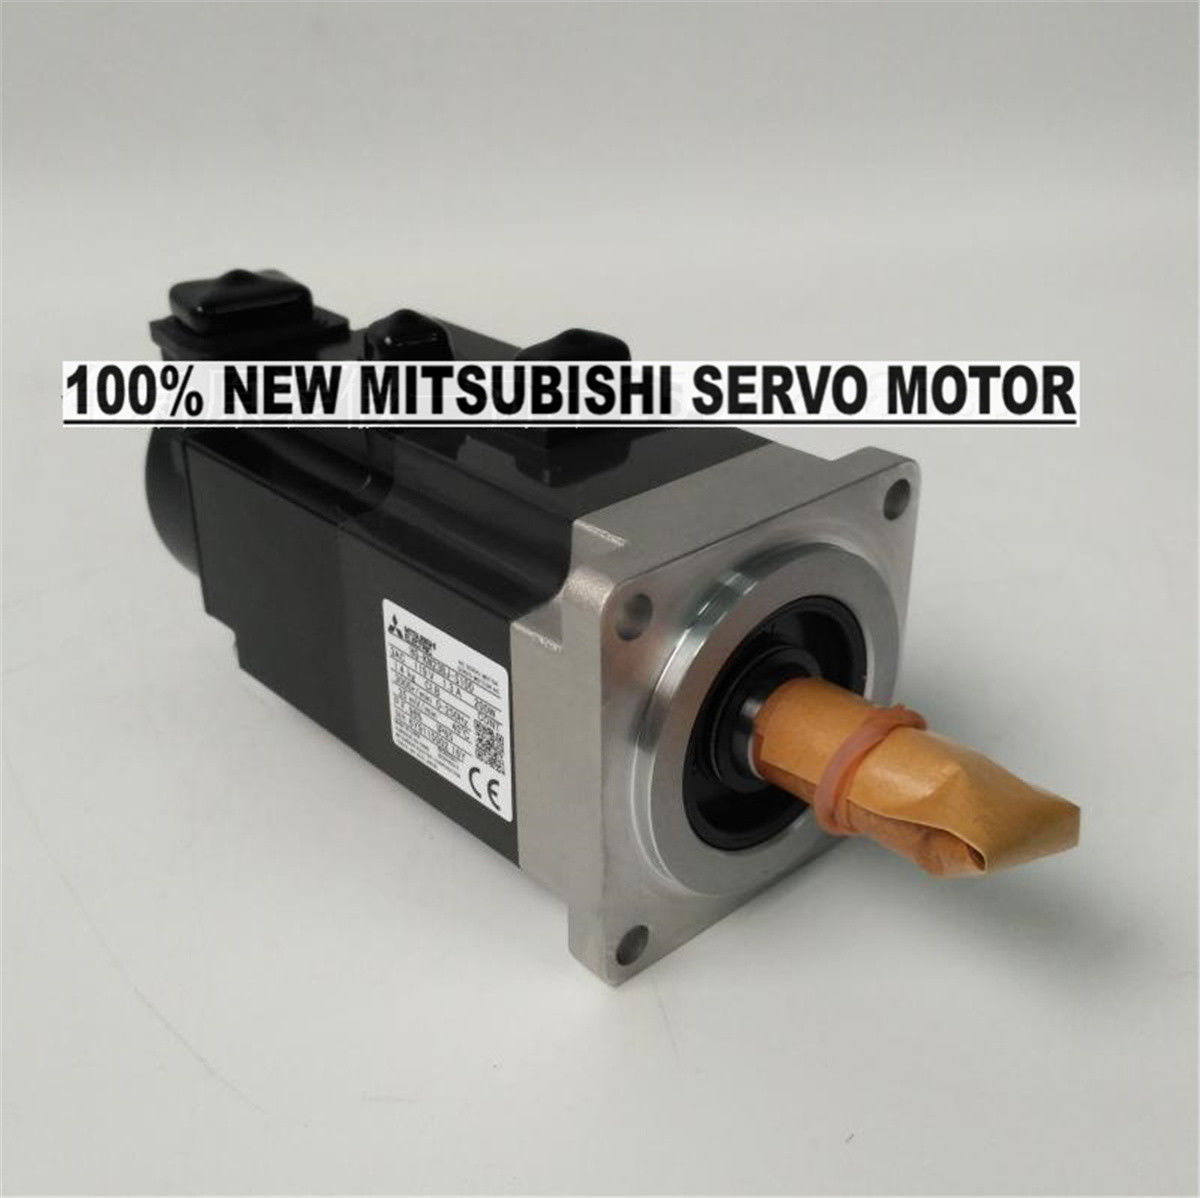 NEW Mitsubishi Servo Motor HG-KN23BJ-S100 in box HGKN23BJS100 - Click Image to Close